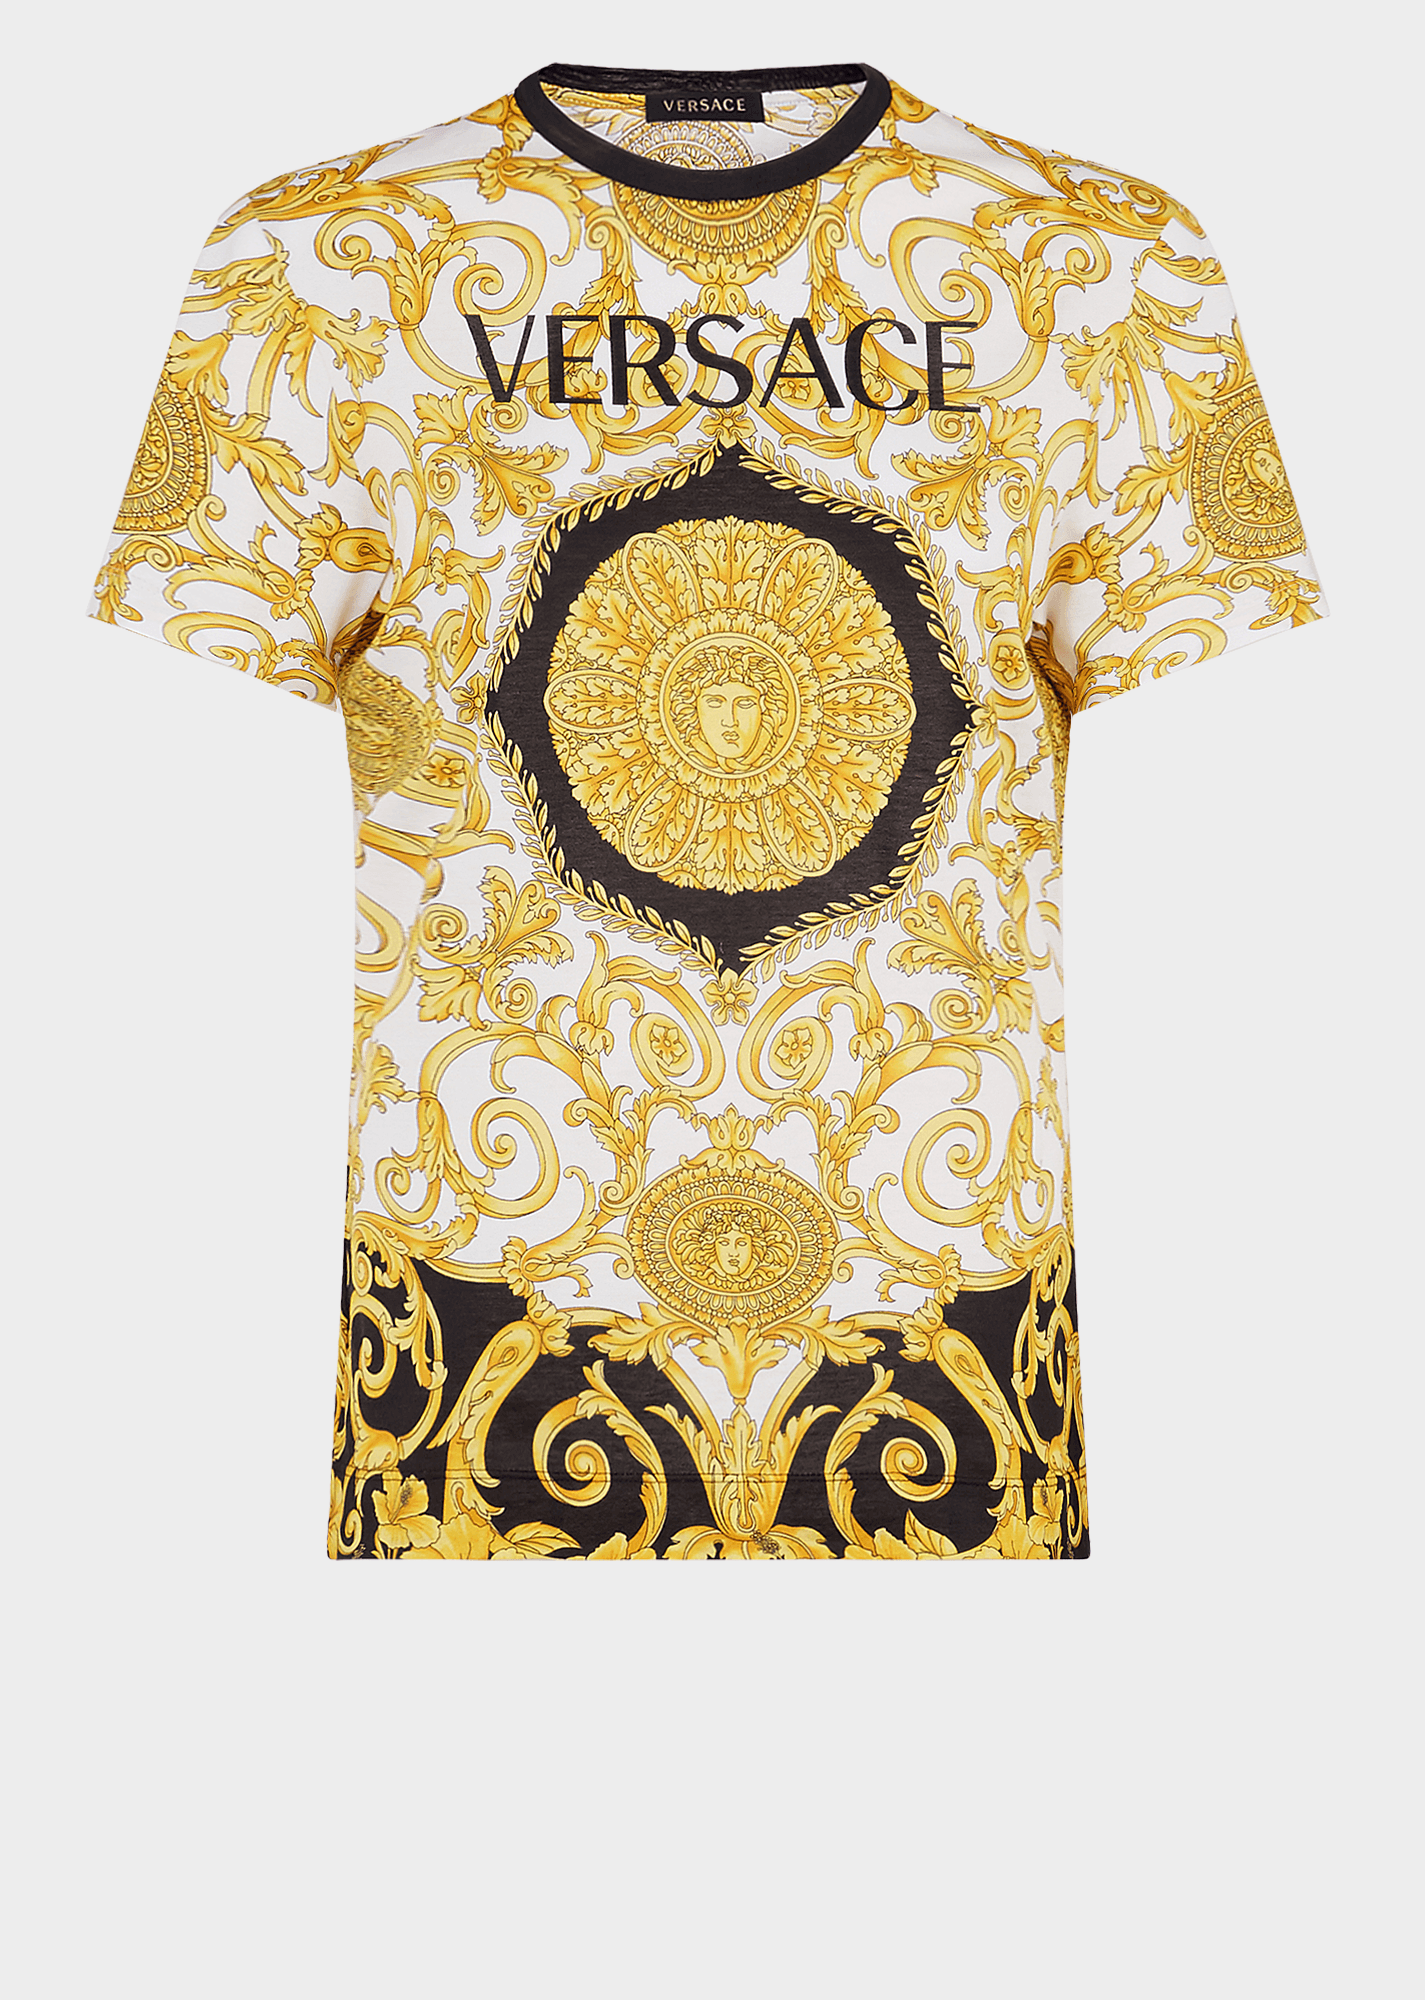 Versace Gold Logo - Versace Gold Hibiscus Print Logo T Shirt For Women. UK Online Store